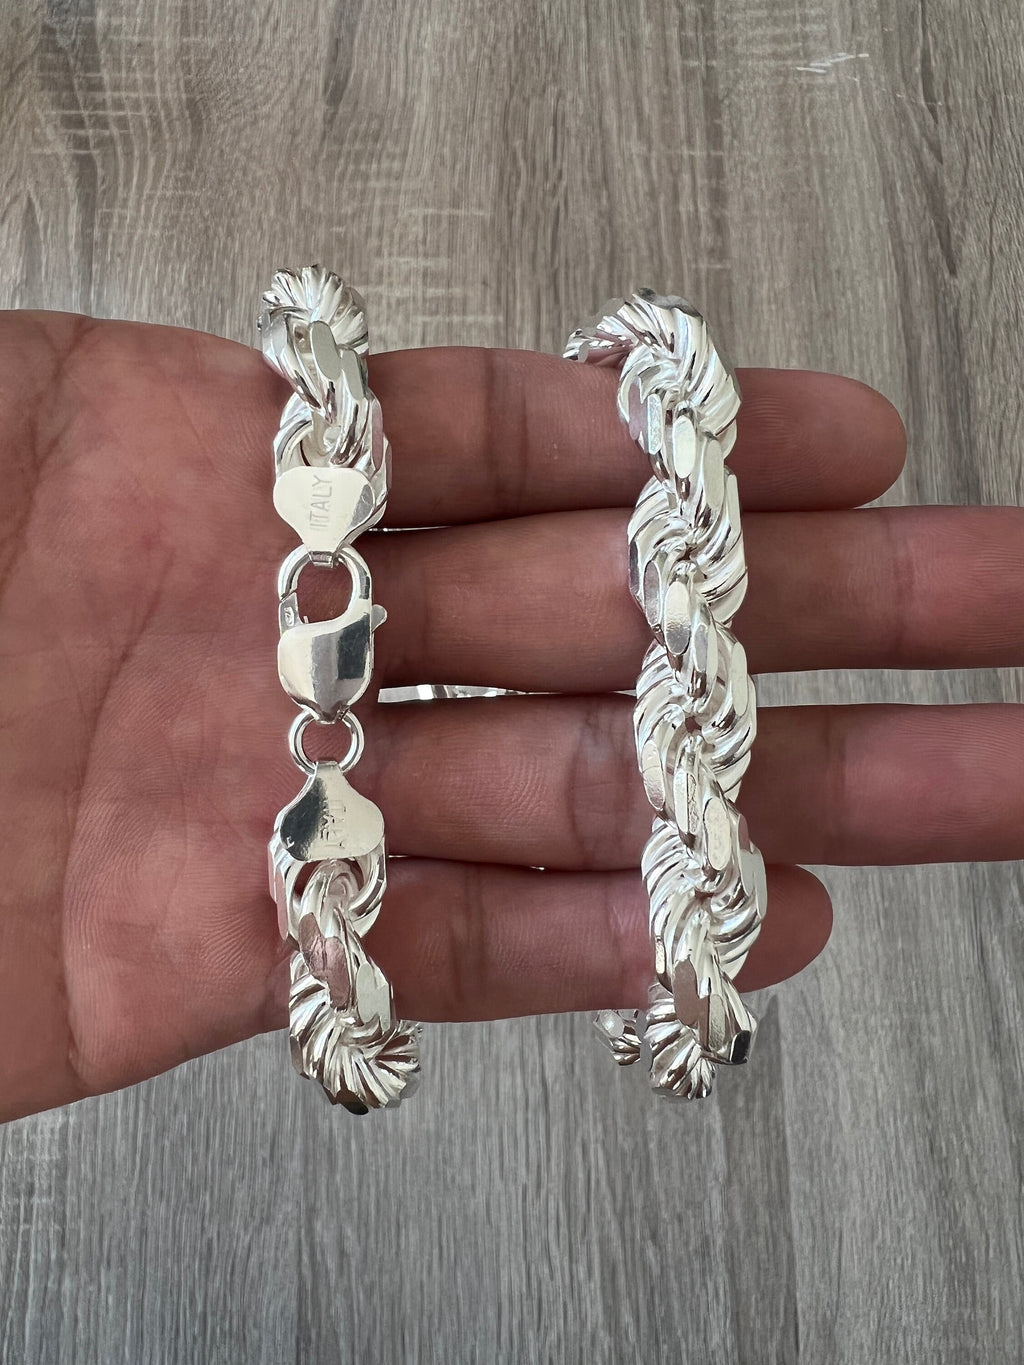 4mm 925 Silver Rope Chain Necklace Sterling Silver 16 18 20 22 24 26 28 30  inch italian unisex men women woman man